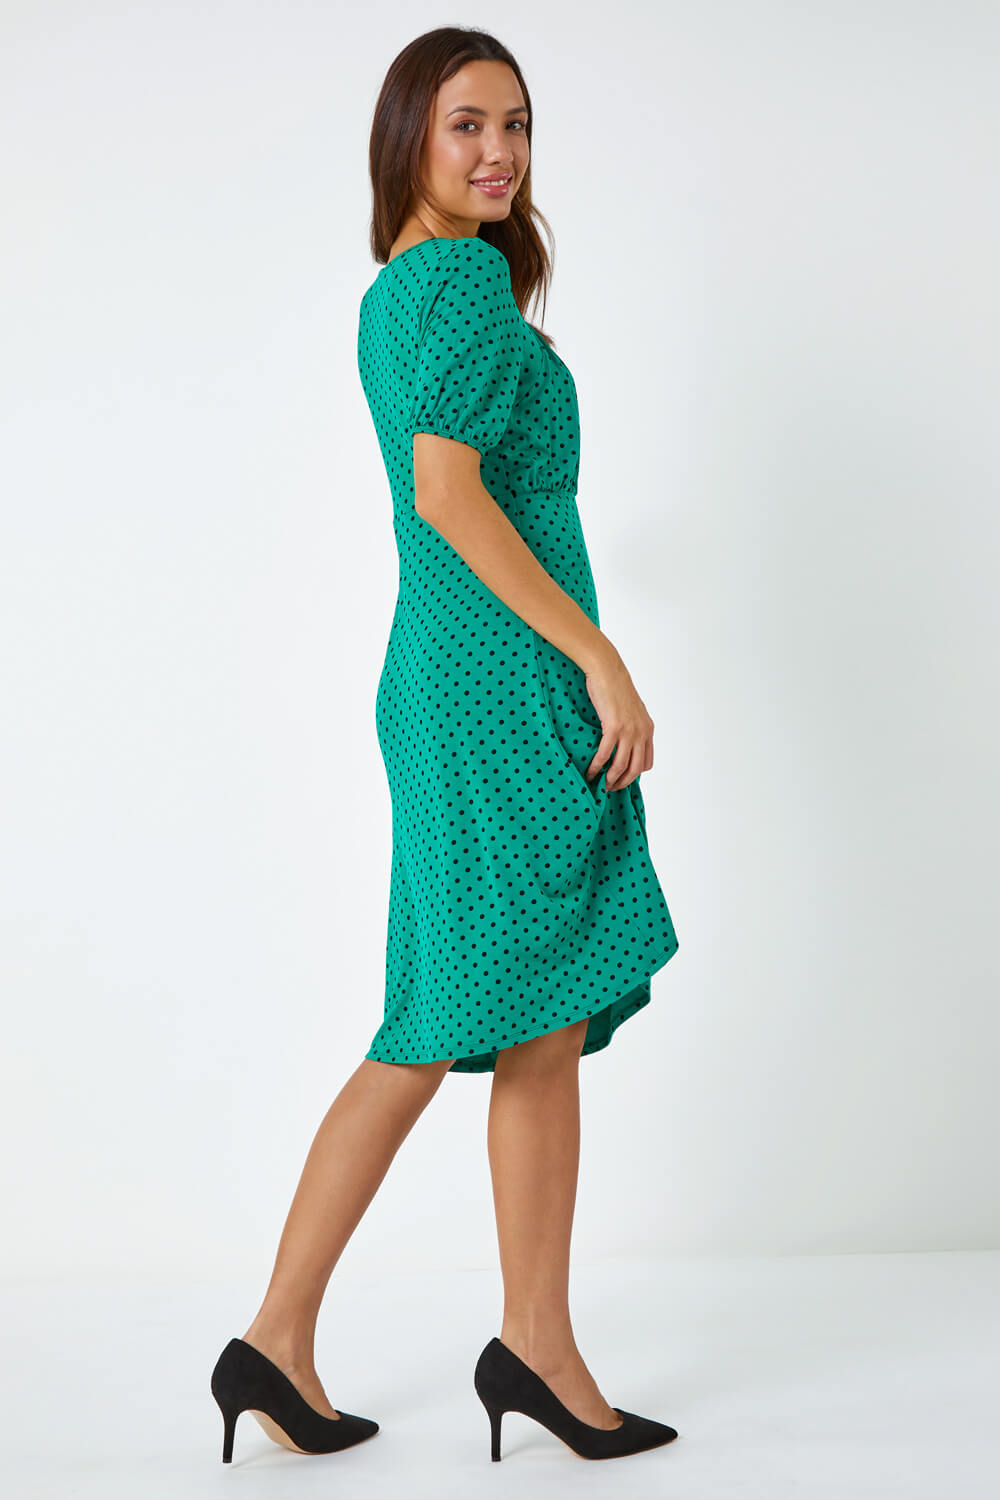 Green Polka Dot Print Stretch Dress, Image 3 of 5